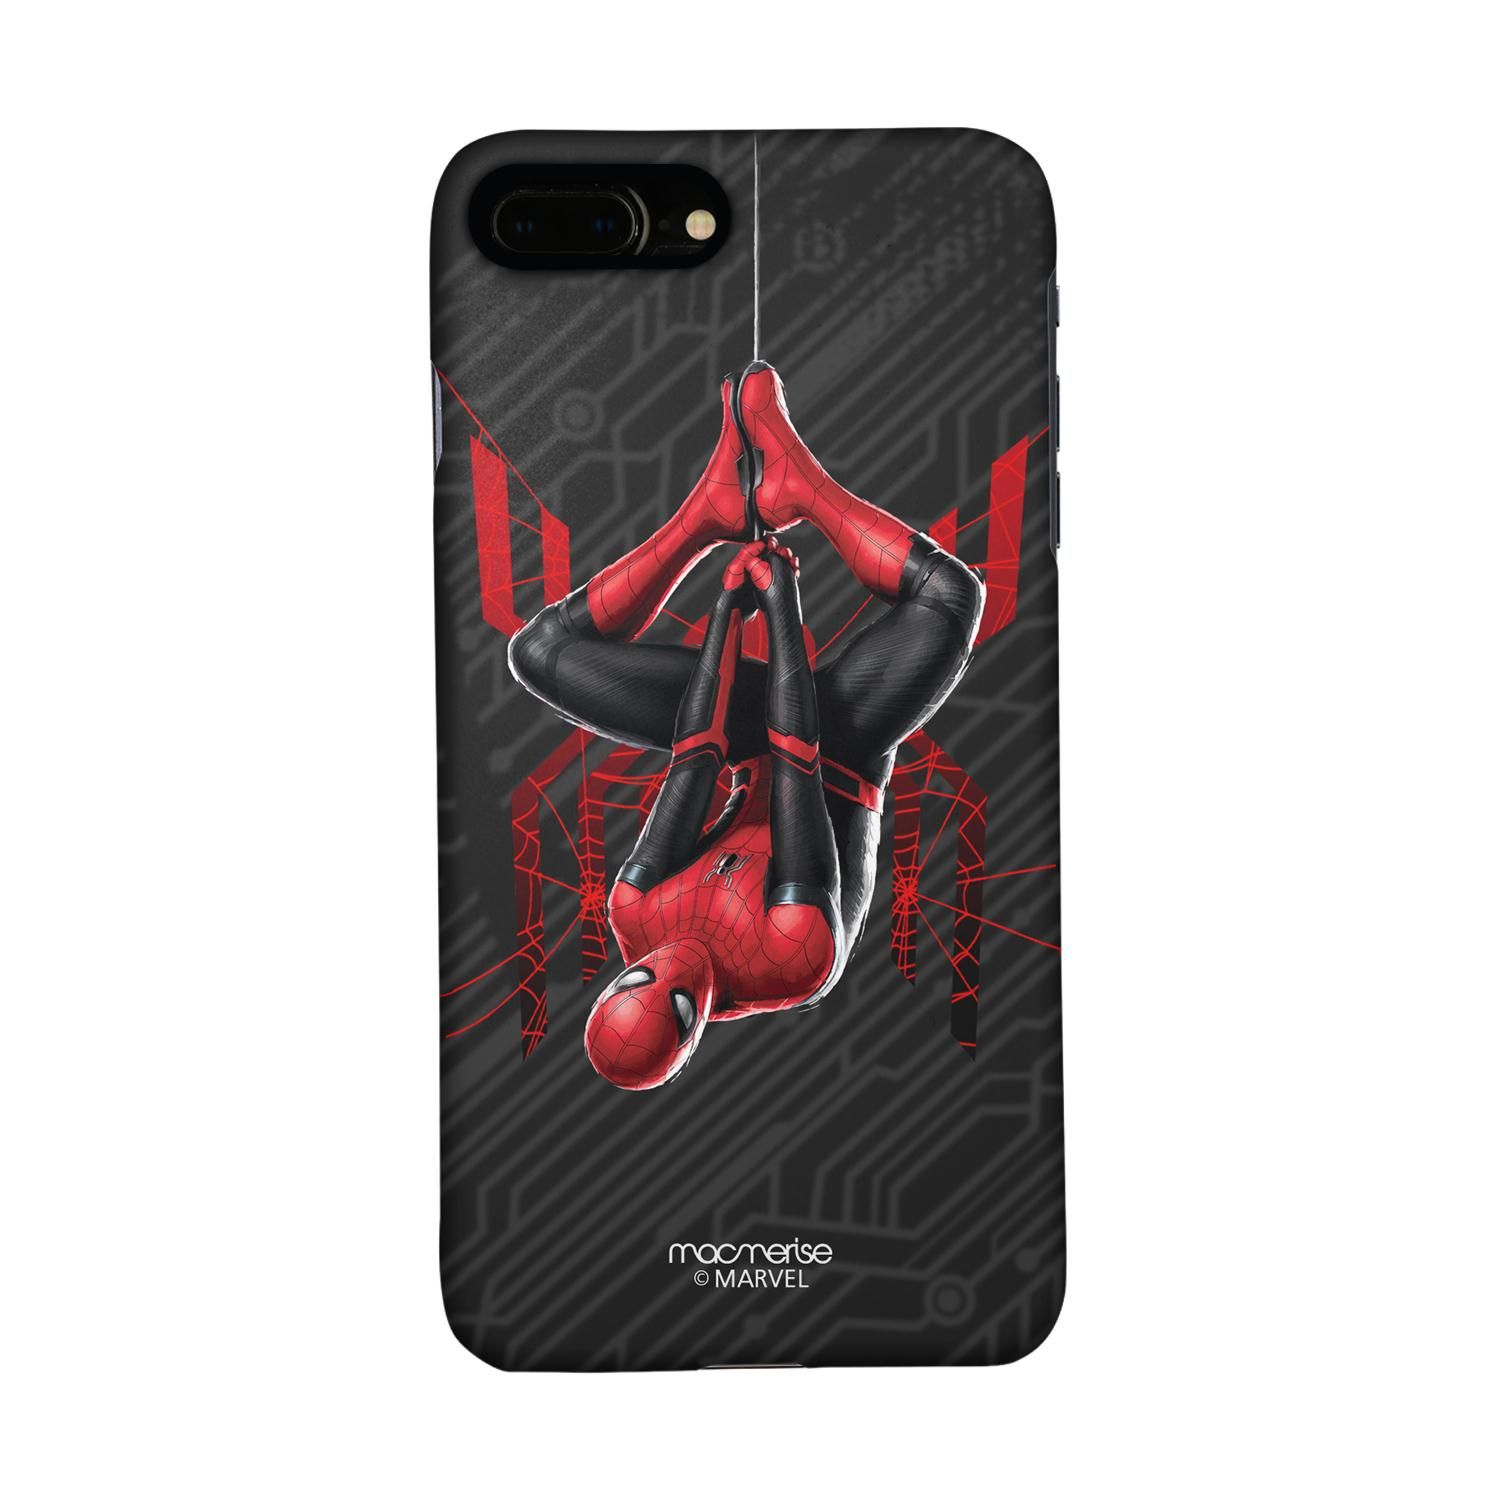 Buy Spiderman Tingle - Sleek Phone Case for iPhone 7 Plus Online